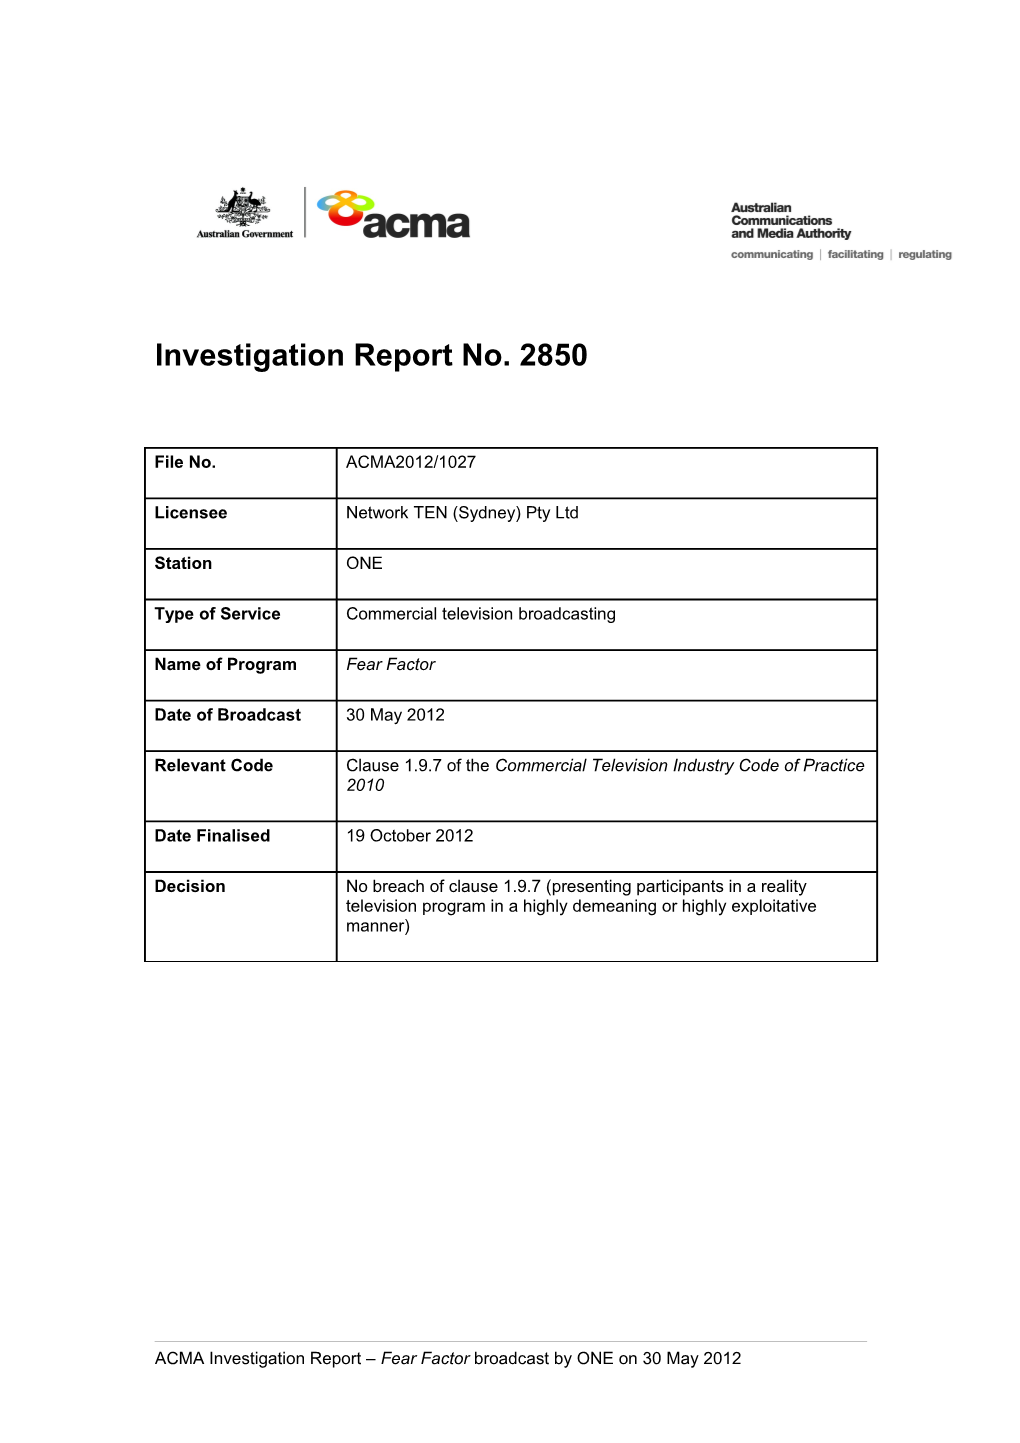 ONE TV - ACMA Investigation Report 2850